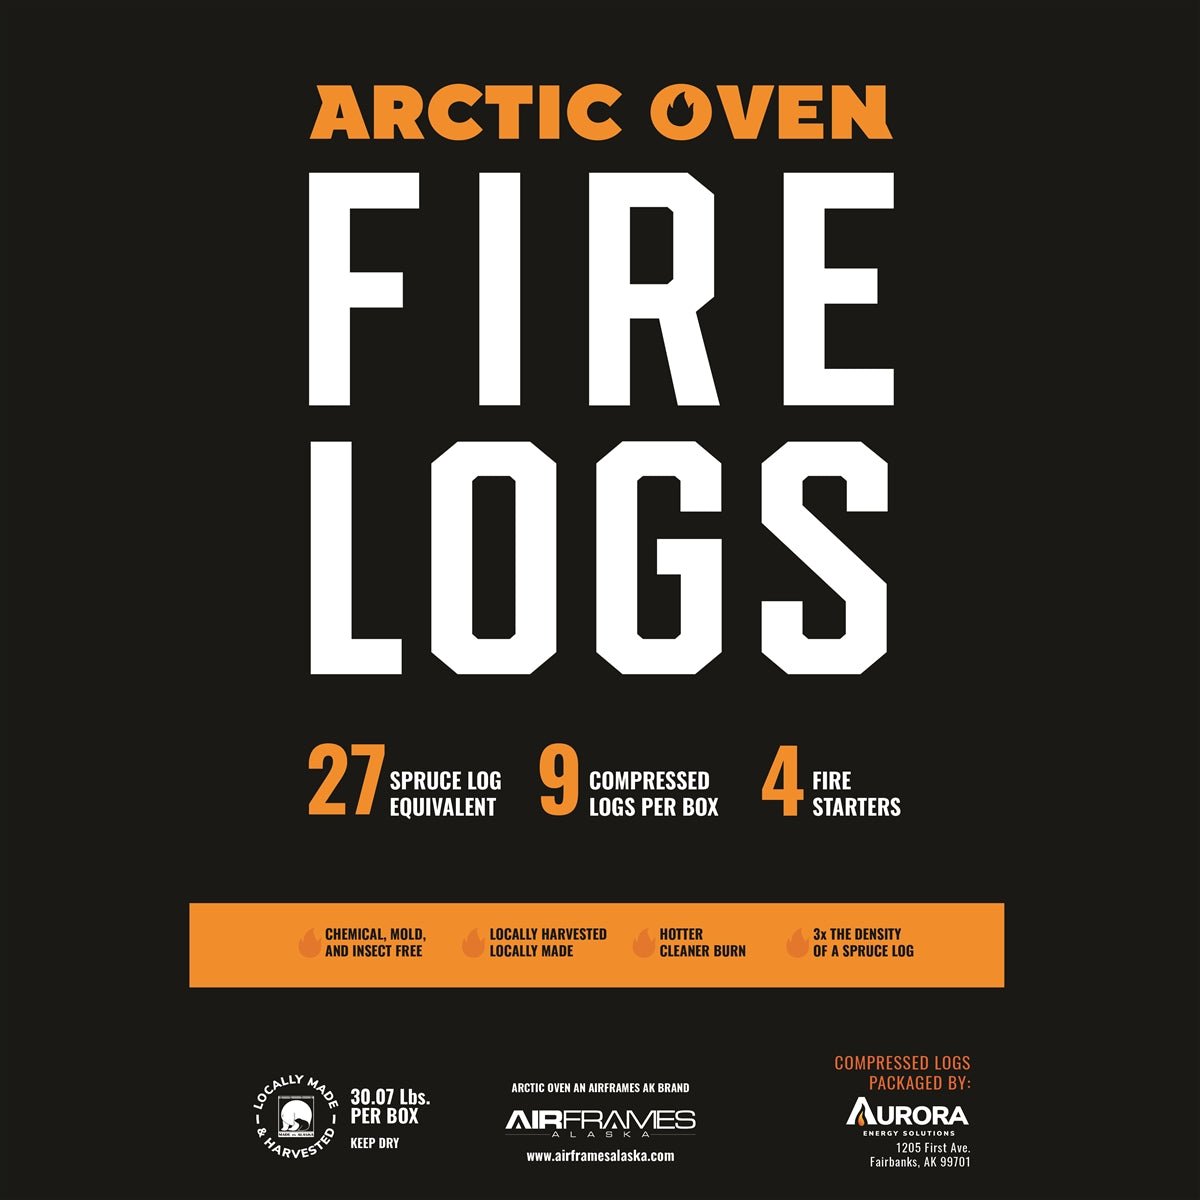 Alaska Gear Company Arctic Oven Fire Logs - Fire In a Box